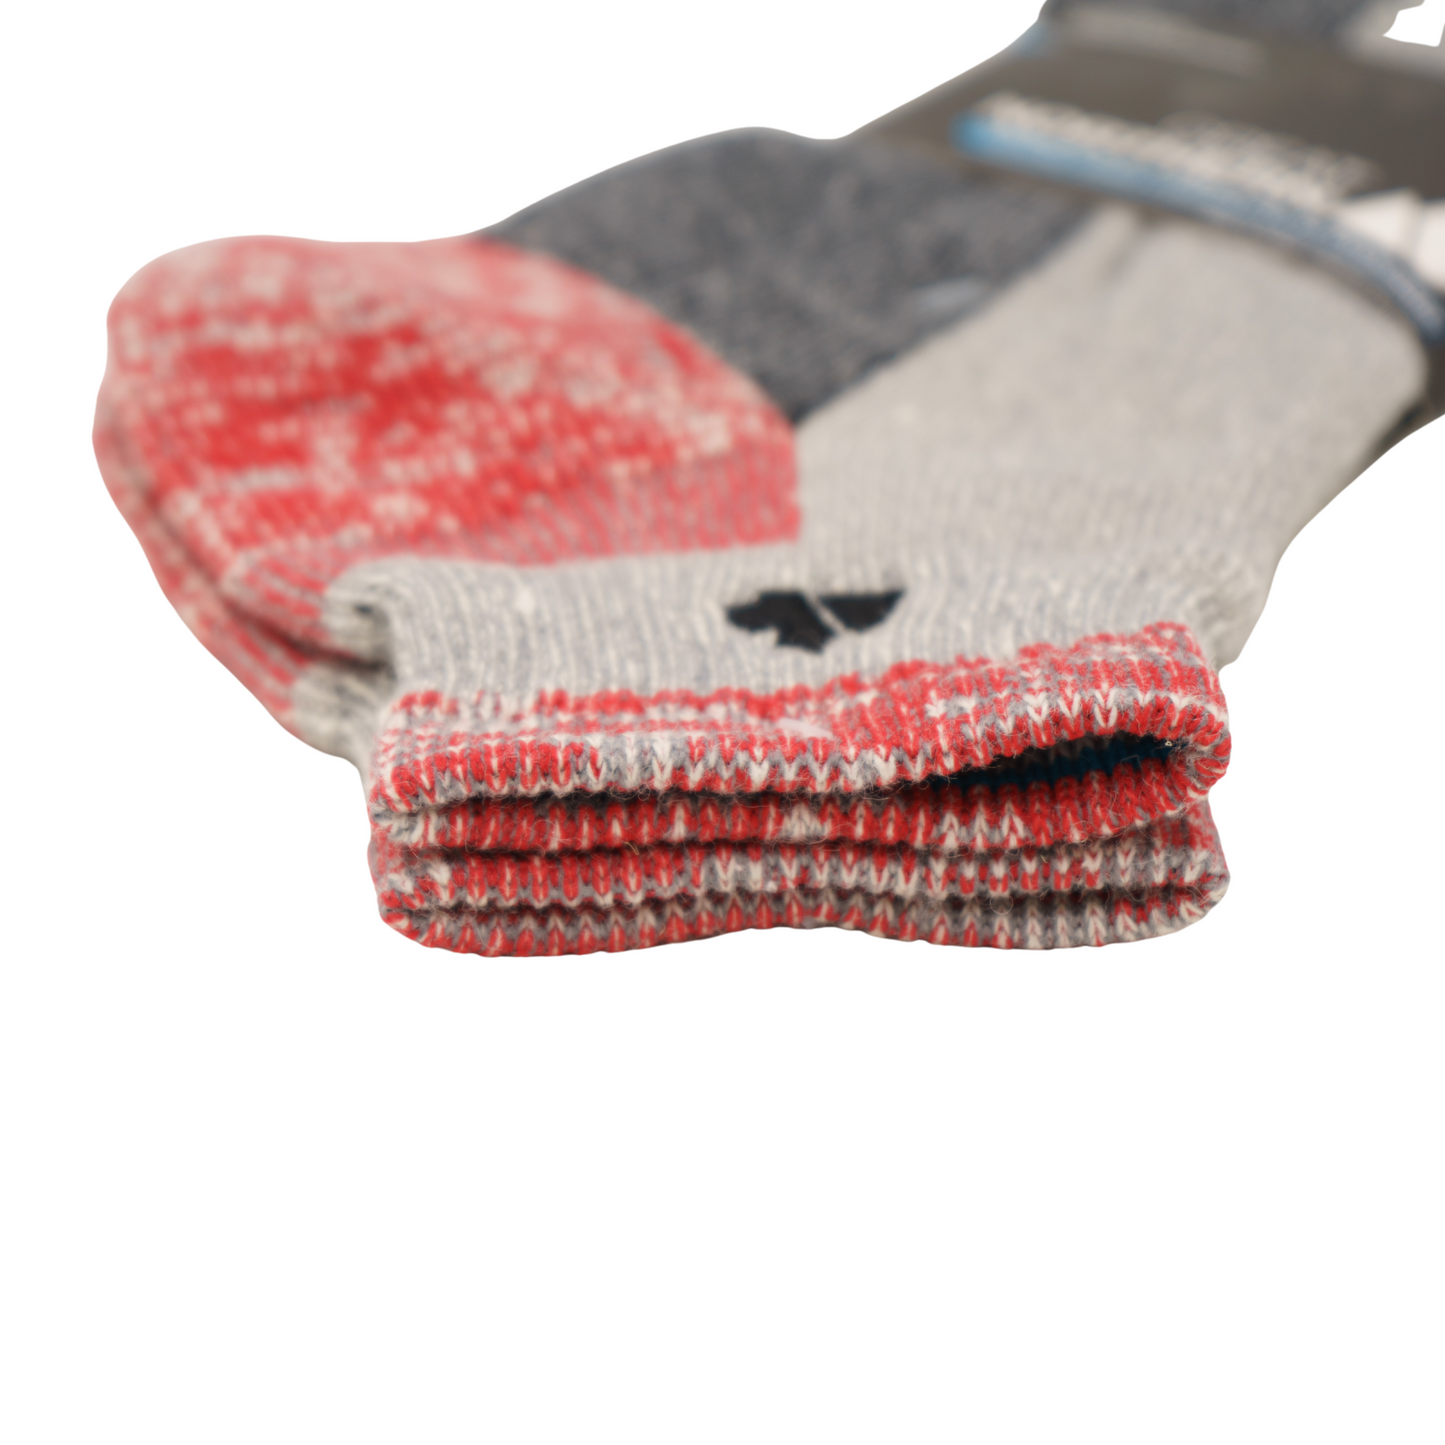 GN Technical Acrylic/Wool Blend Ankle Socks